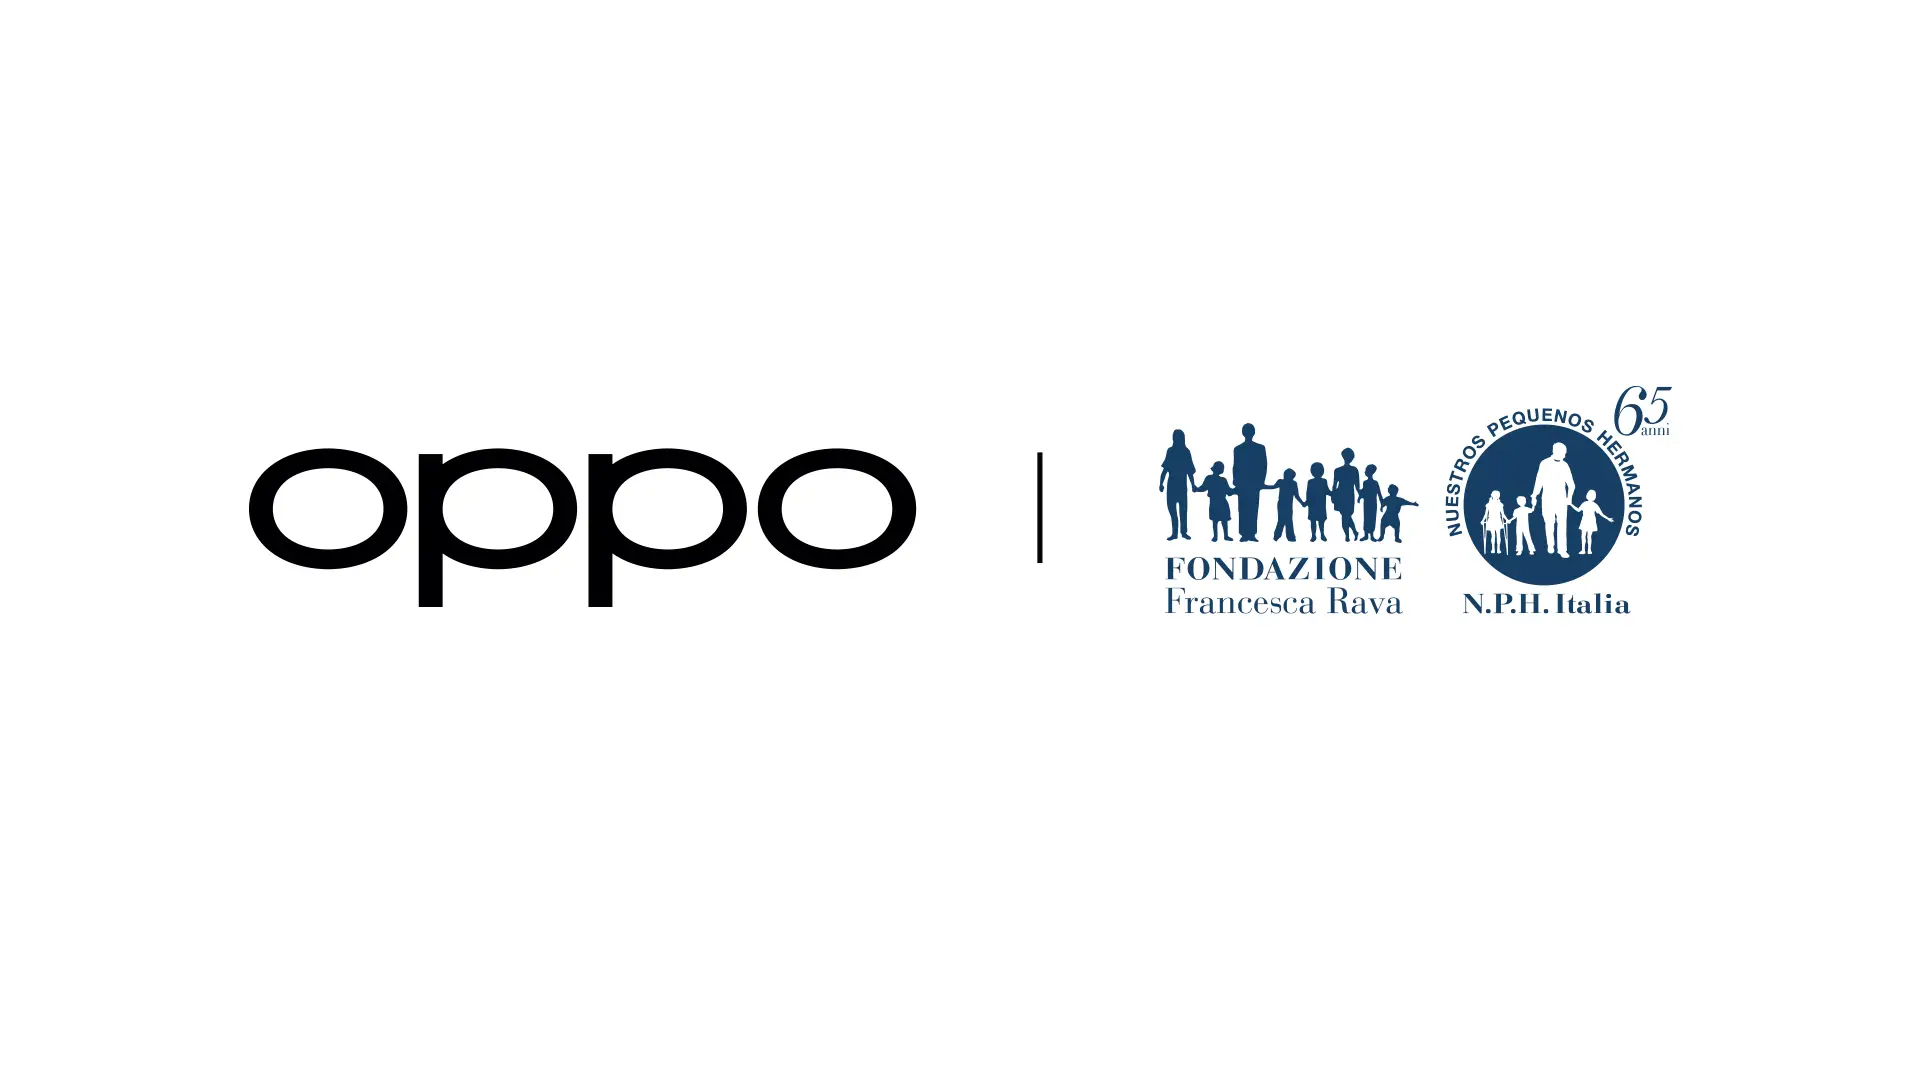 Oppo Italia donates 100 smartphones to the Francesca Rava Foundation